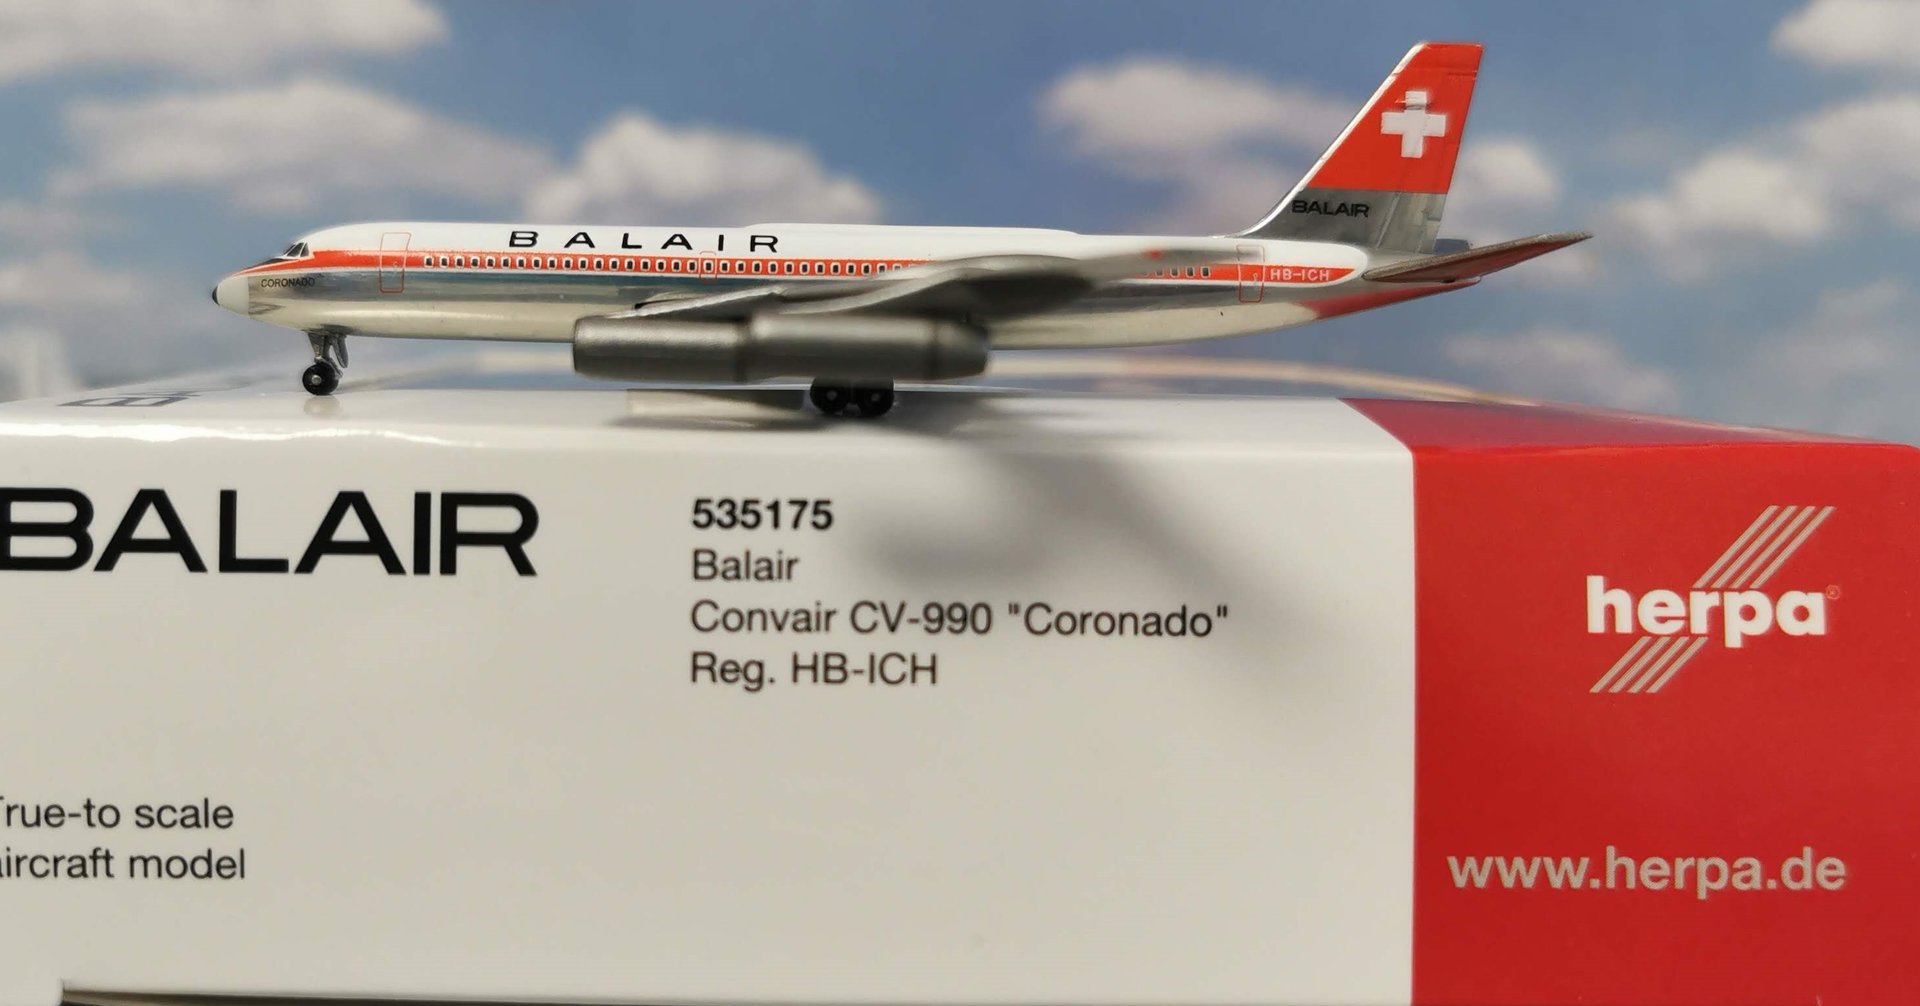 535175 Herpa Wings 1:500 Balair Convair CV-990 “Coronado” – HB-ICH